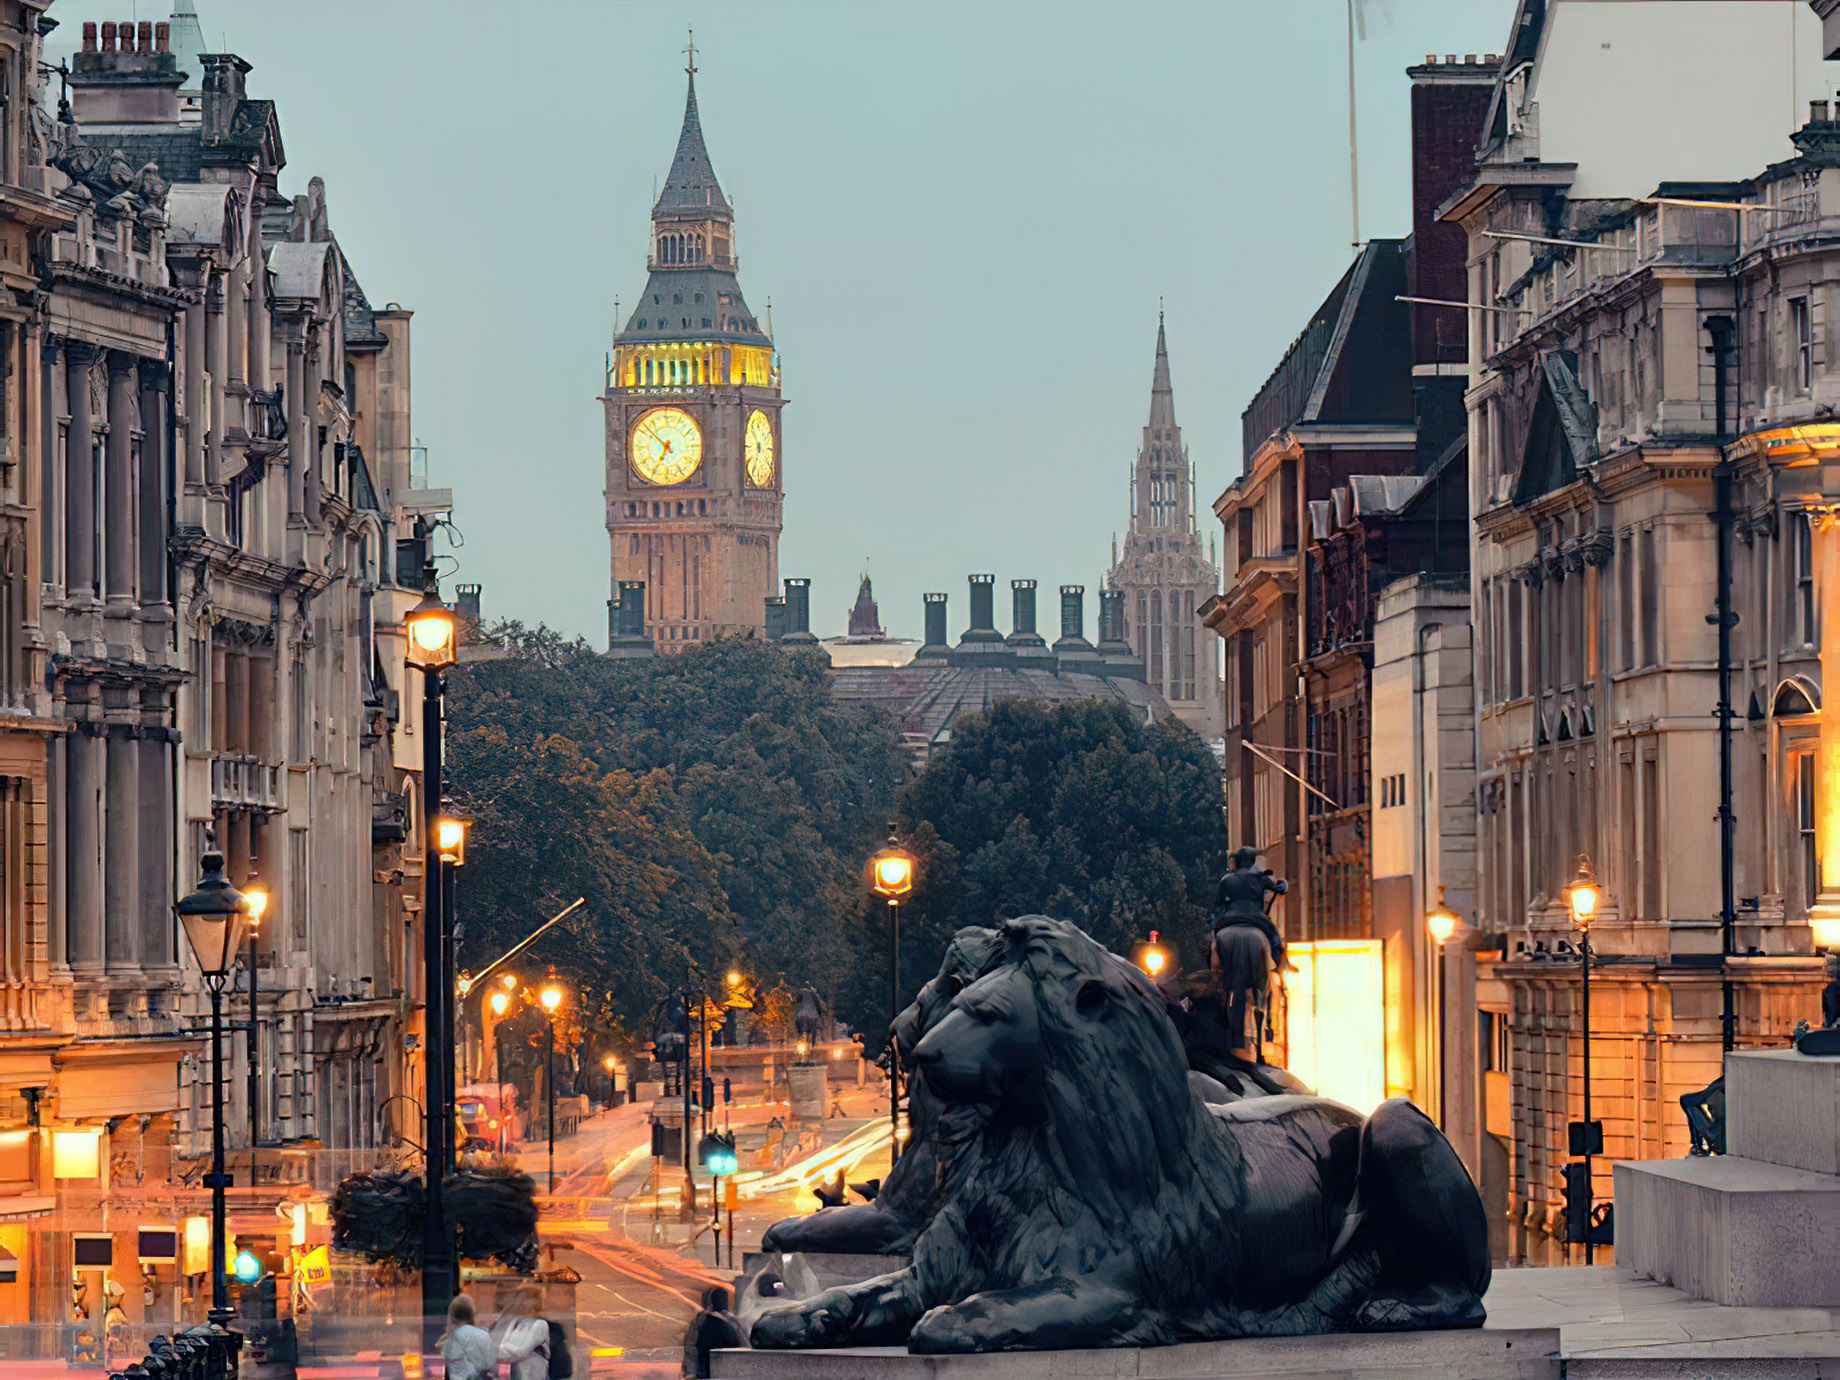 Bvlgari Hotel London – Knightsbridge, London, UK – London Clock Tower Evening View